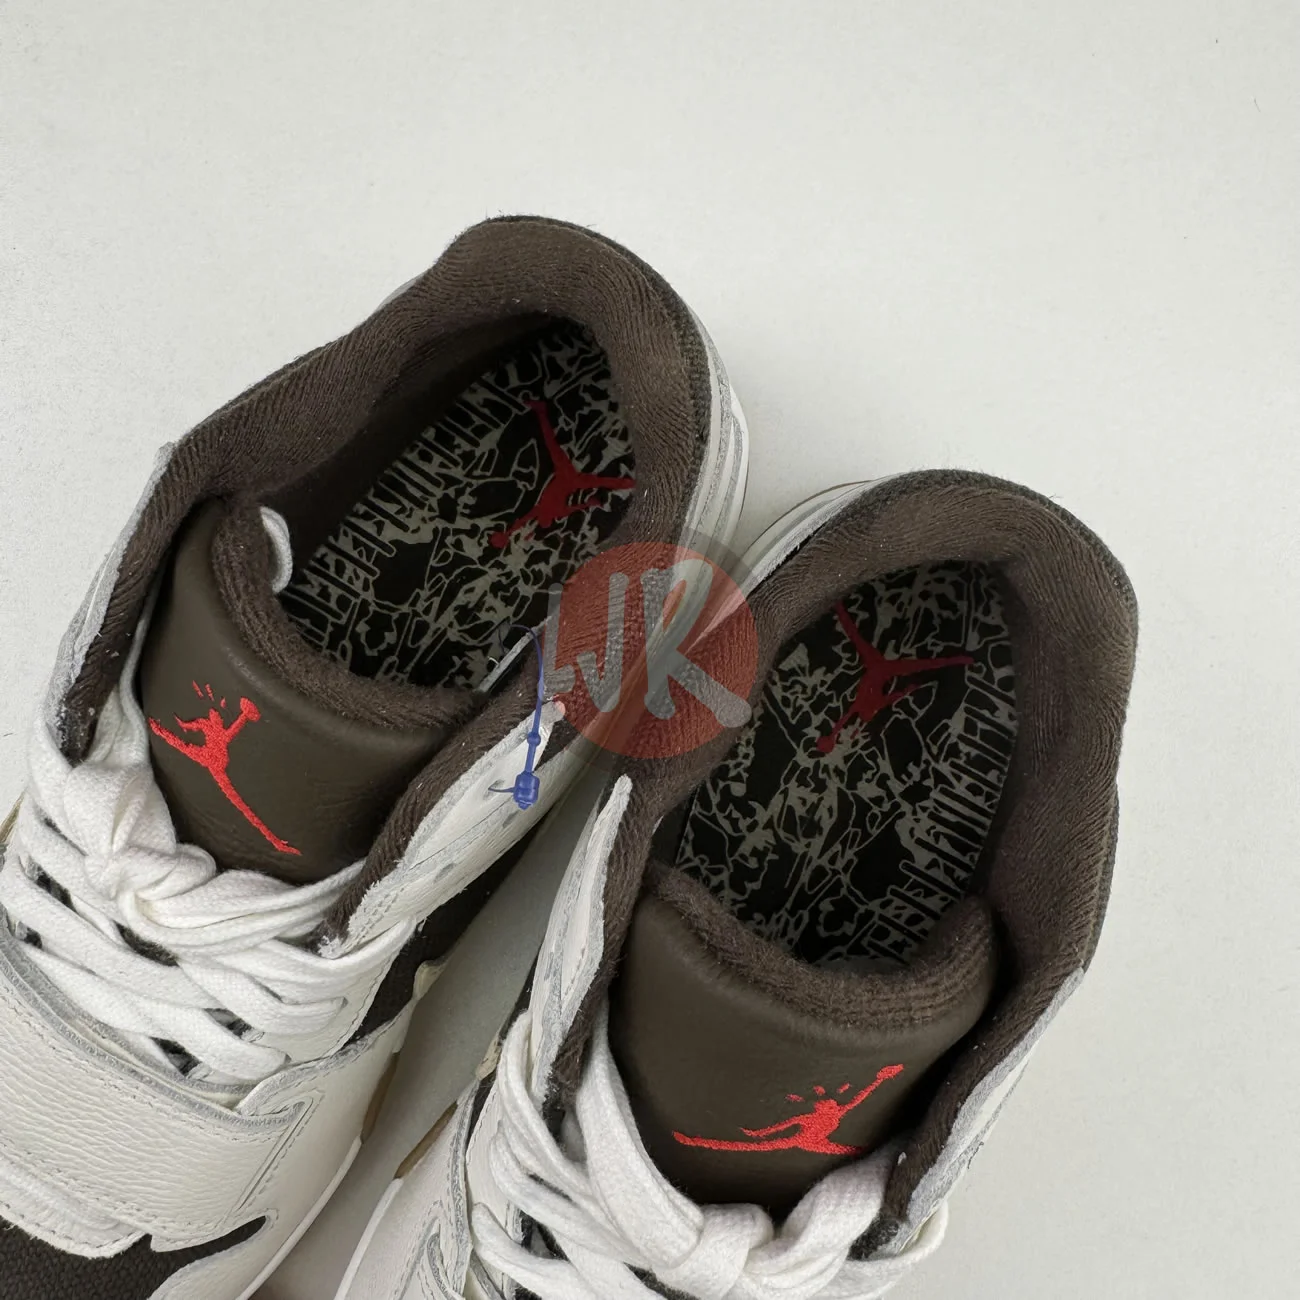 Travis Scott X Jordan Cut The Check Trainer Release Date Ljr Sneakers (14) - bc-ljr.com